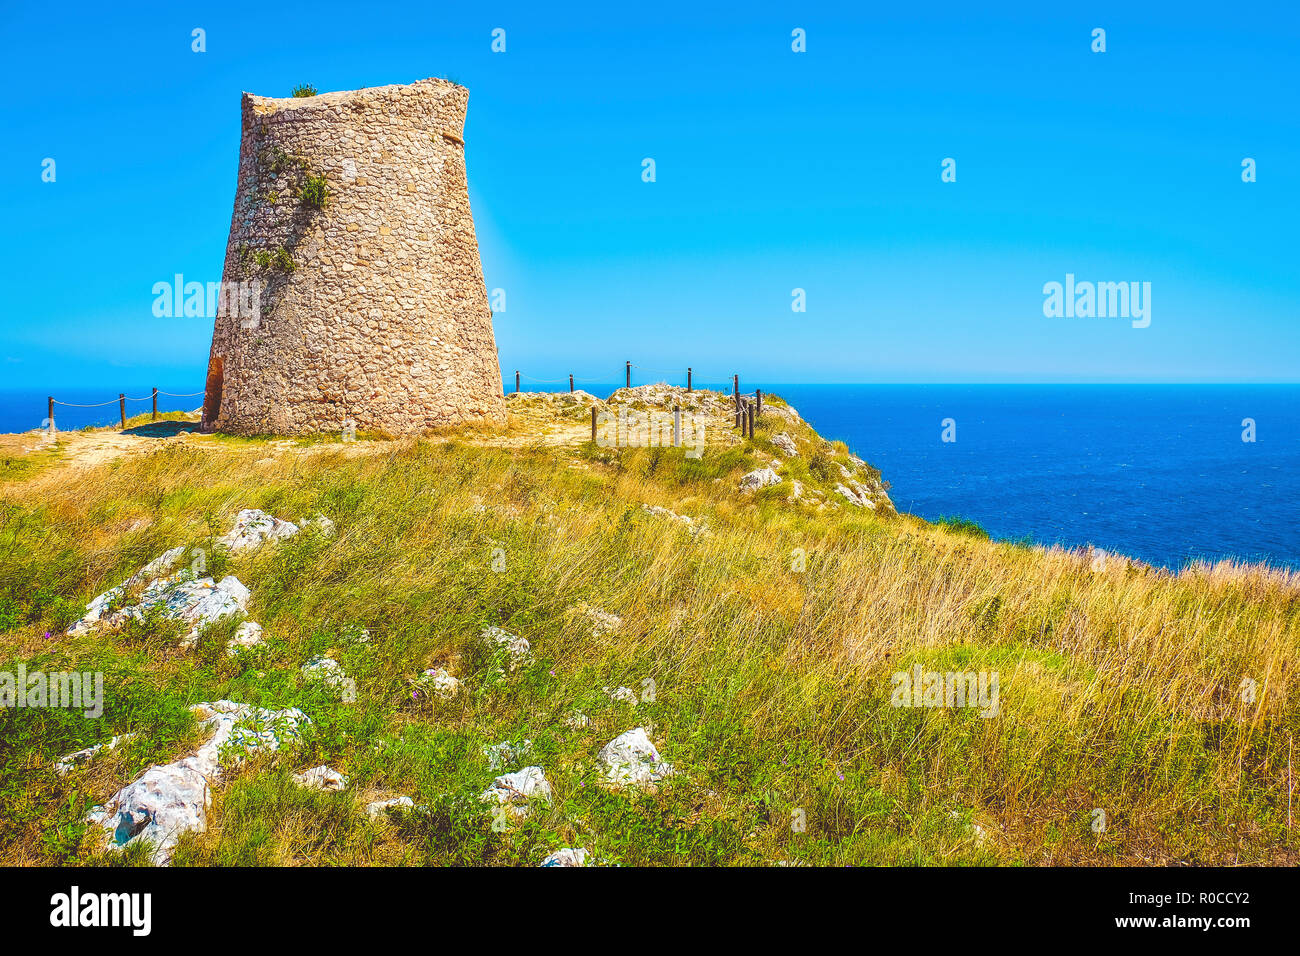 Region Salento scenic Wachtturm Küste Meer Turm Sant Emiliano Otranto Apulien Italien Stockfoto